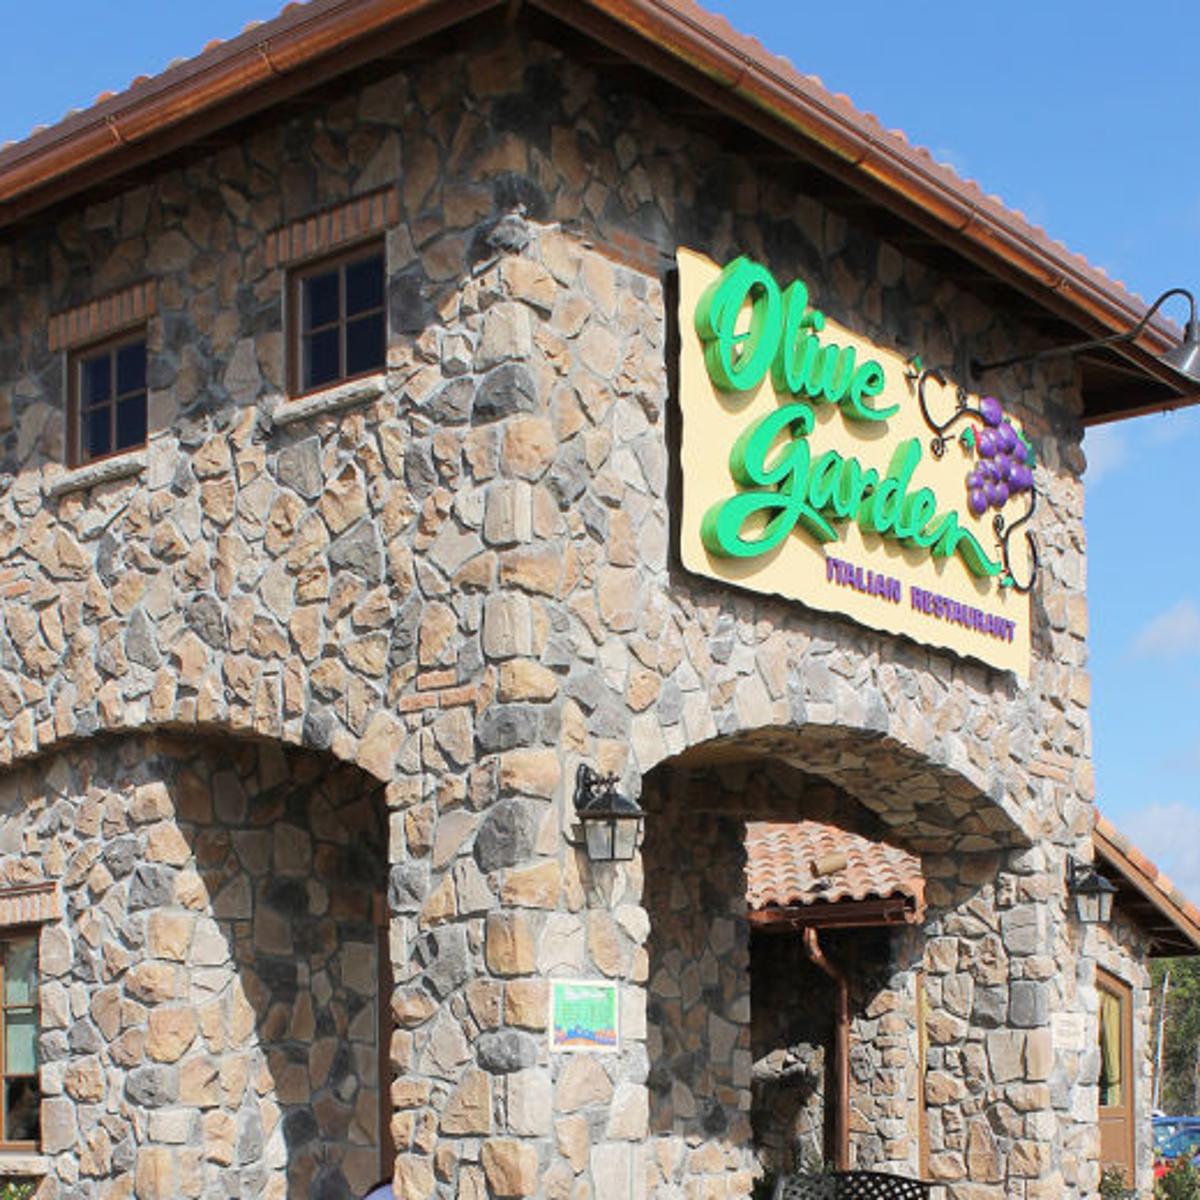 Olive Garden Opening In Valdosta Monday Local News